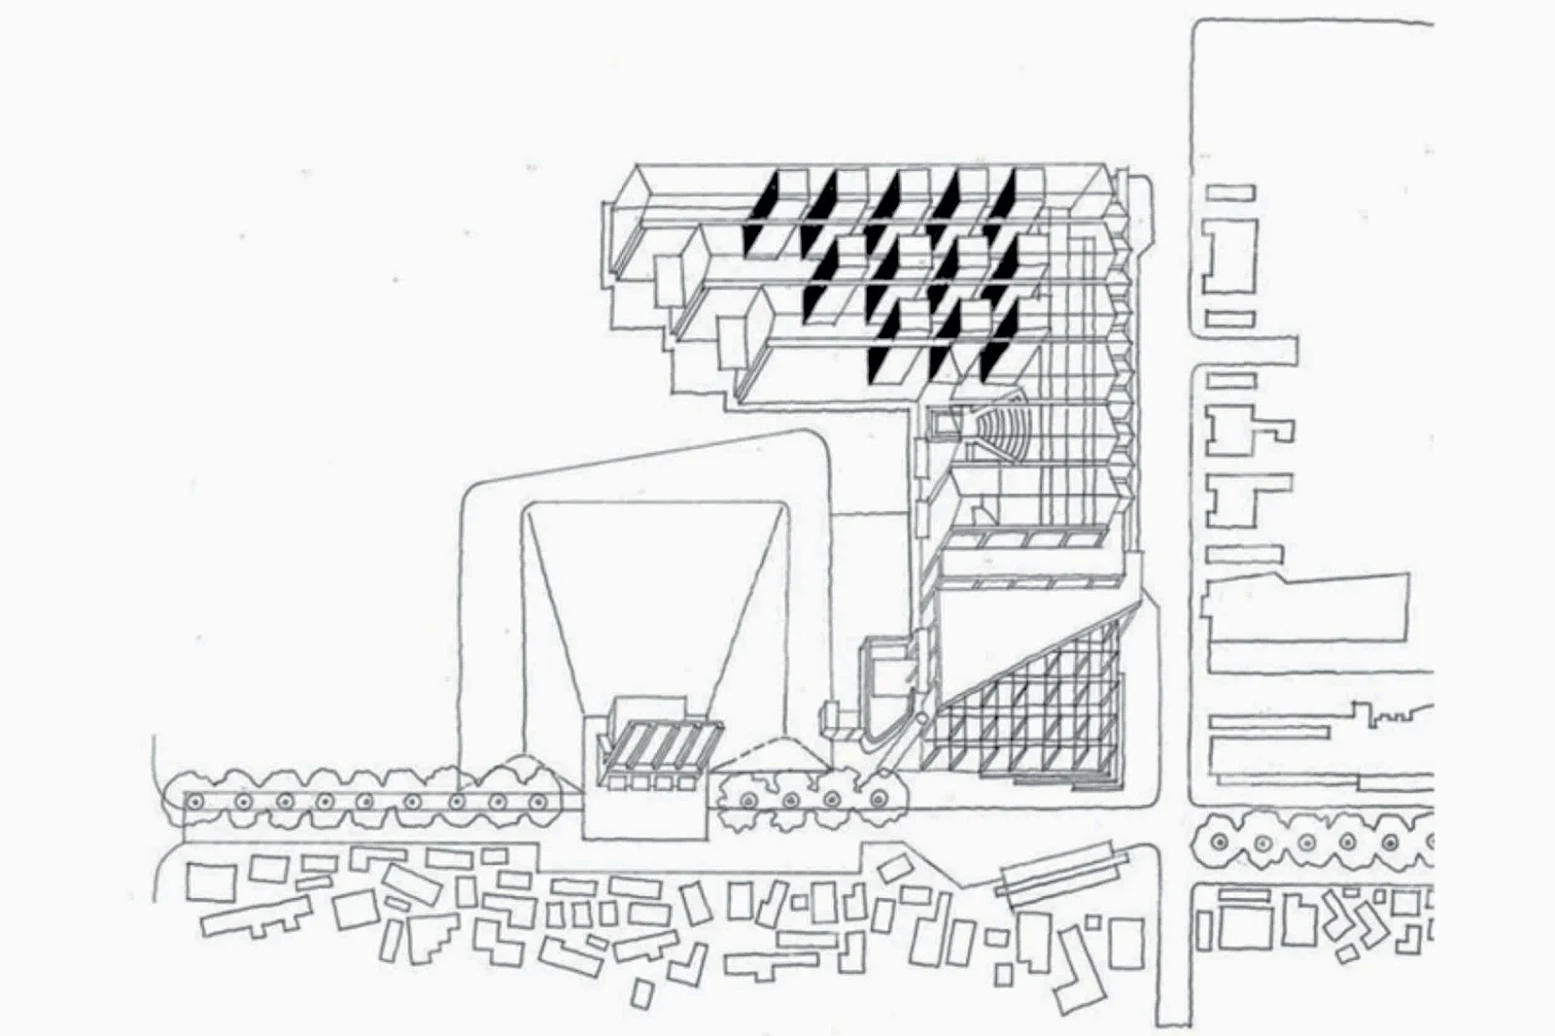 Noero Wolff Architects